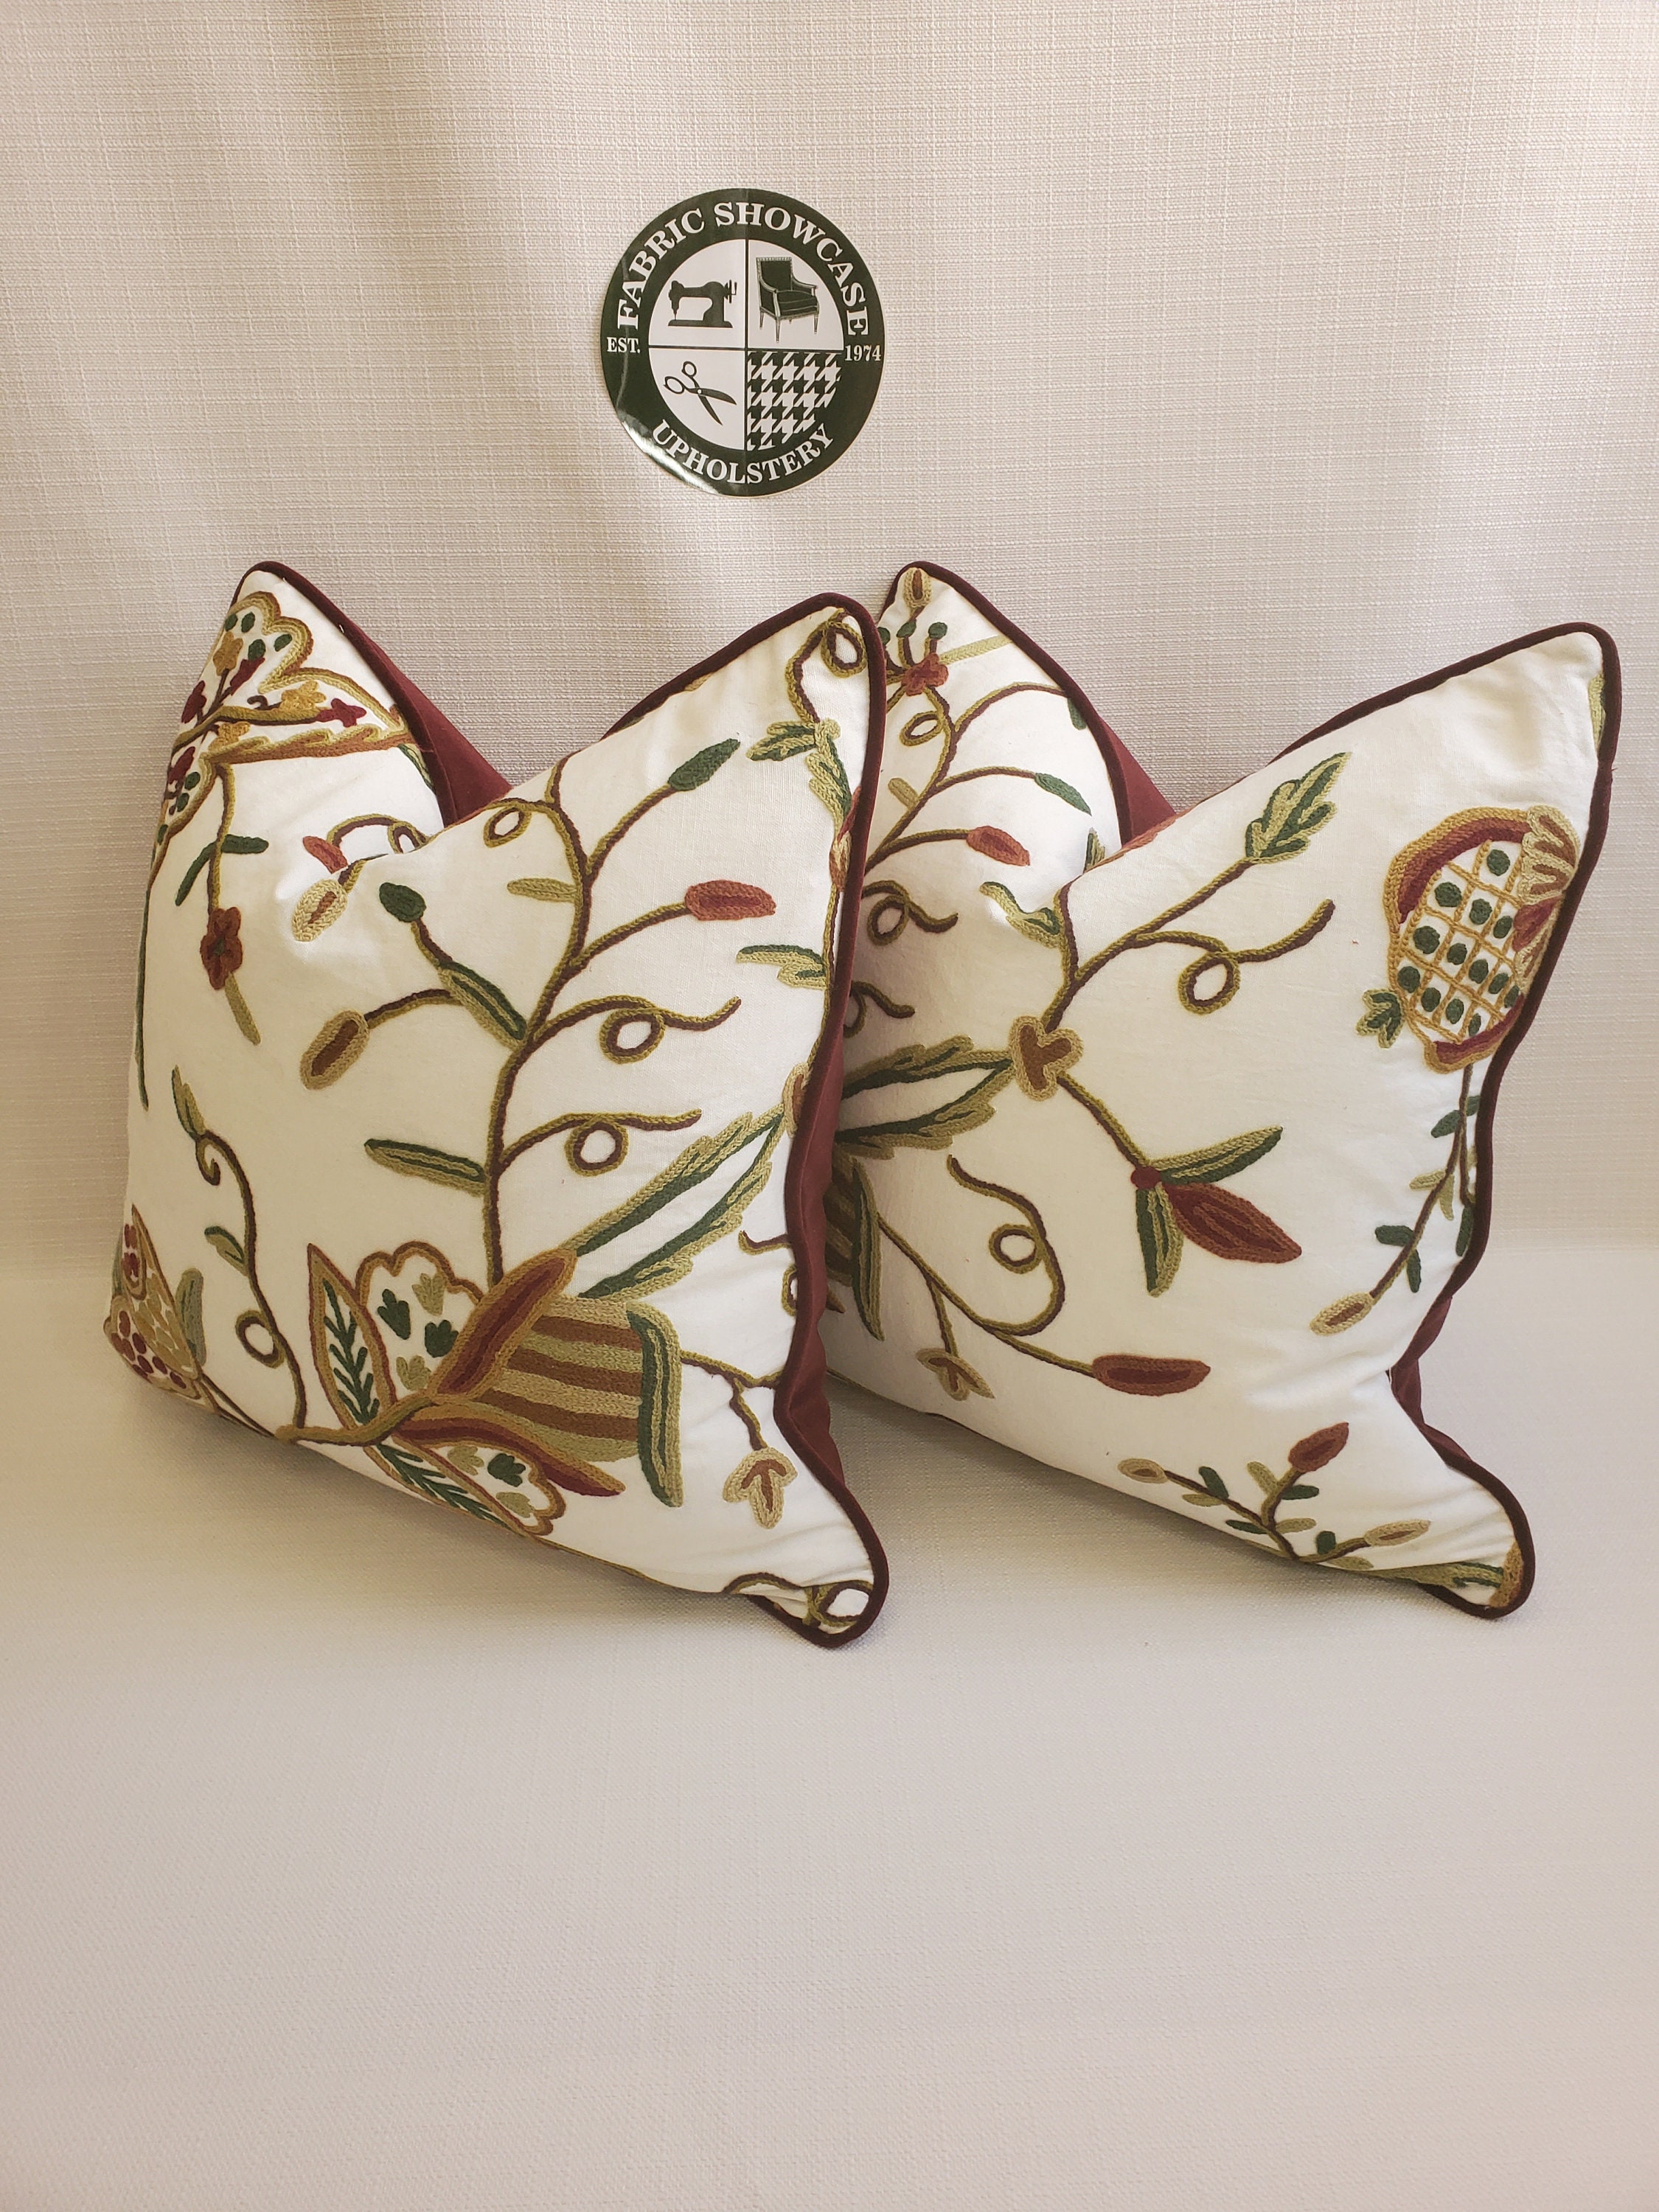 NEW Vtg Athena Craft KIT Pillow Cover Bonnie Little Girl Crewel Needlepoint  14